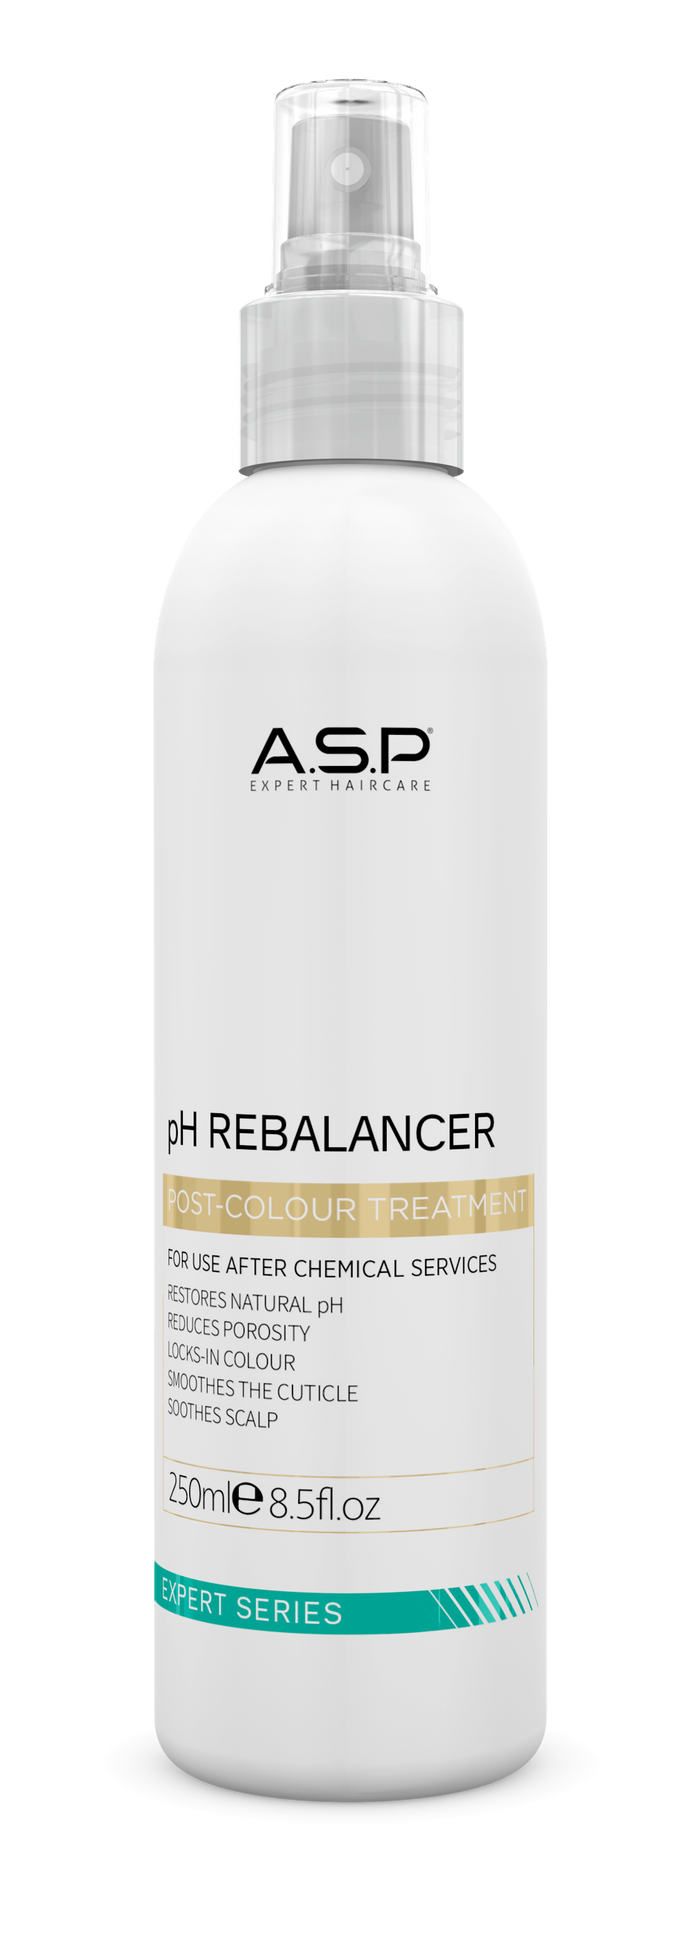 ASP Expert Series pH Rebalancer 250ml